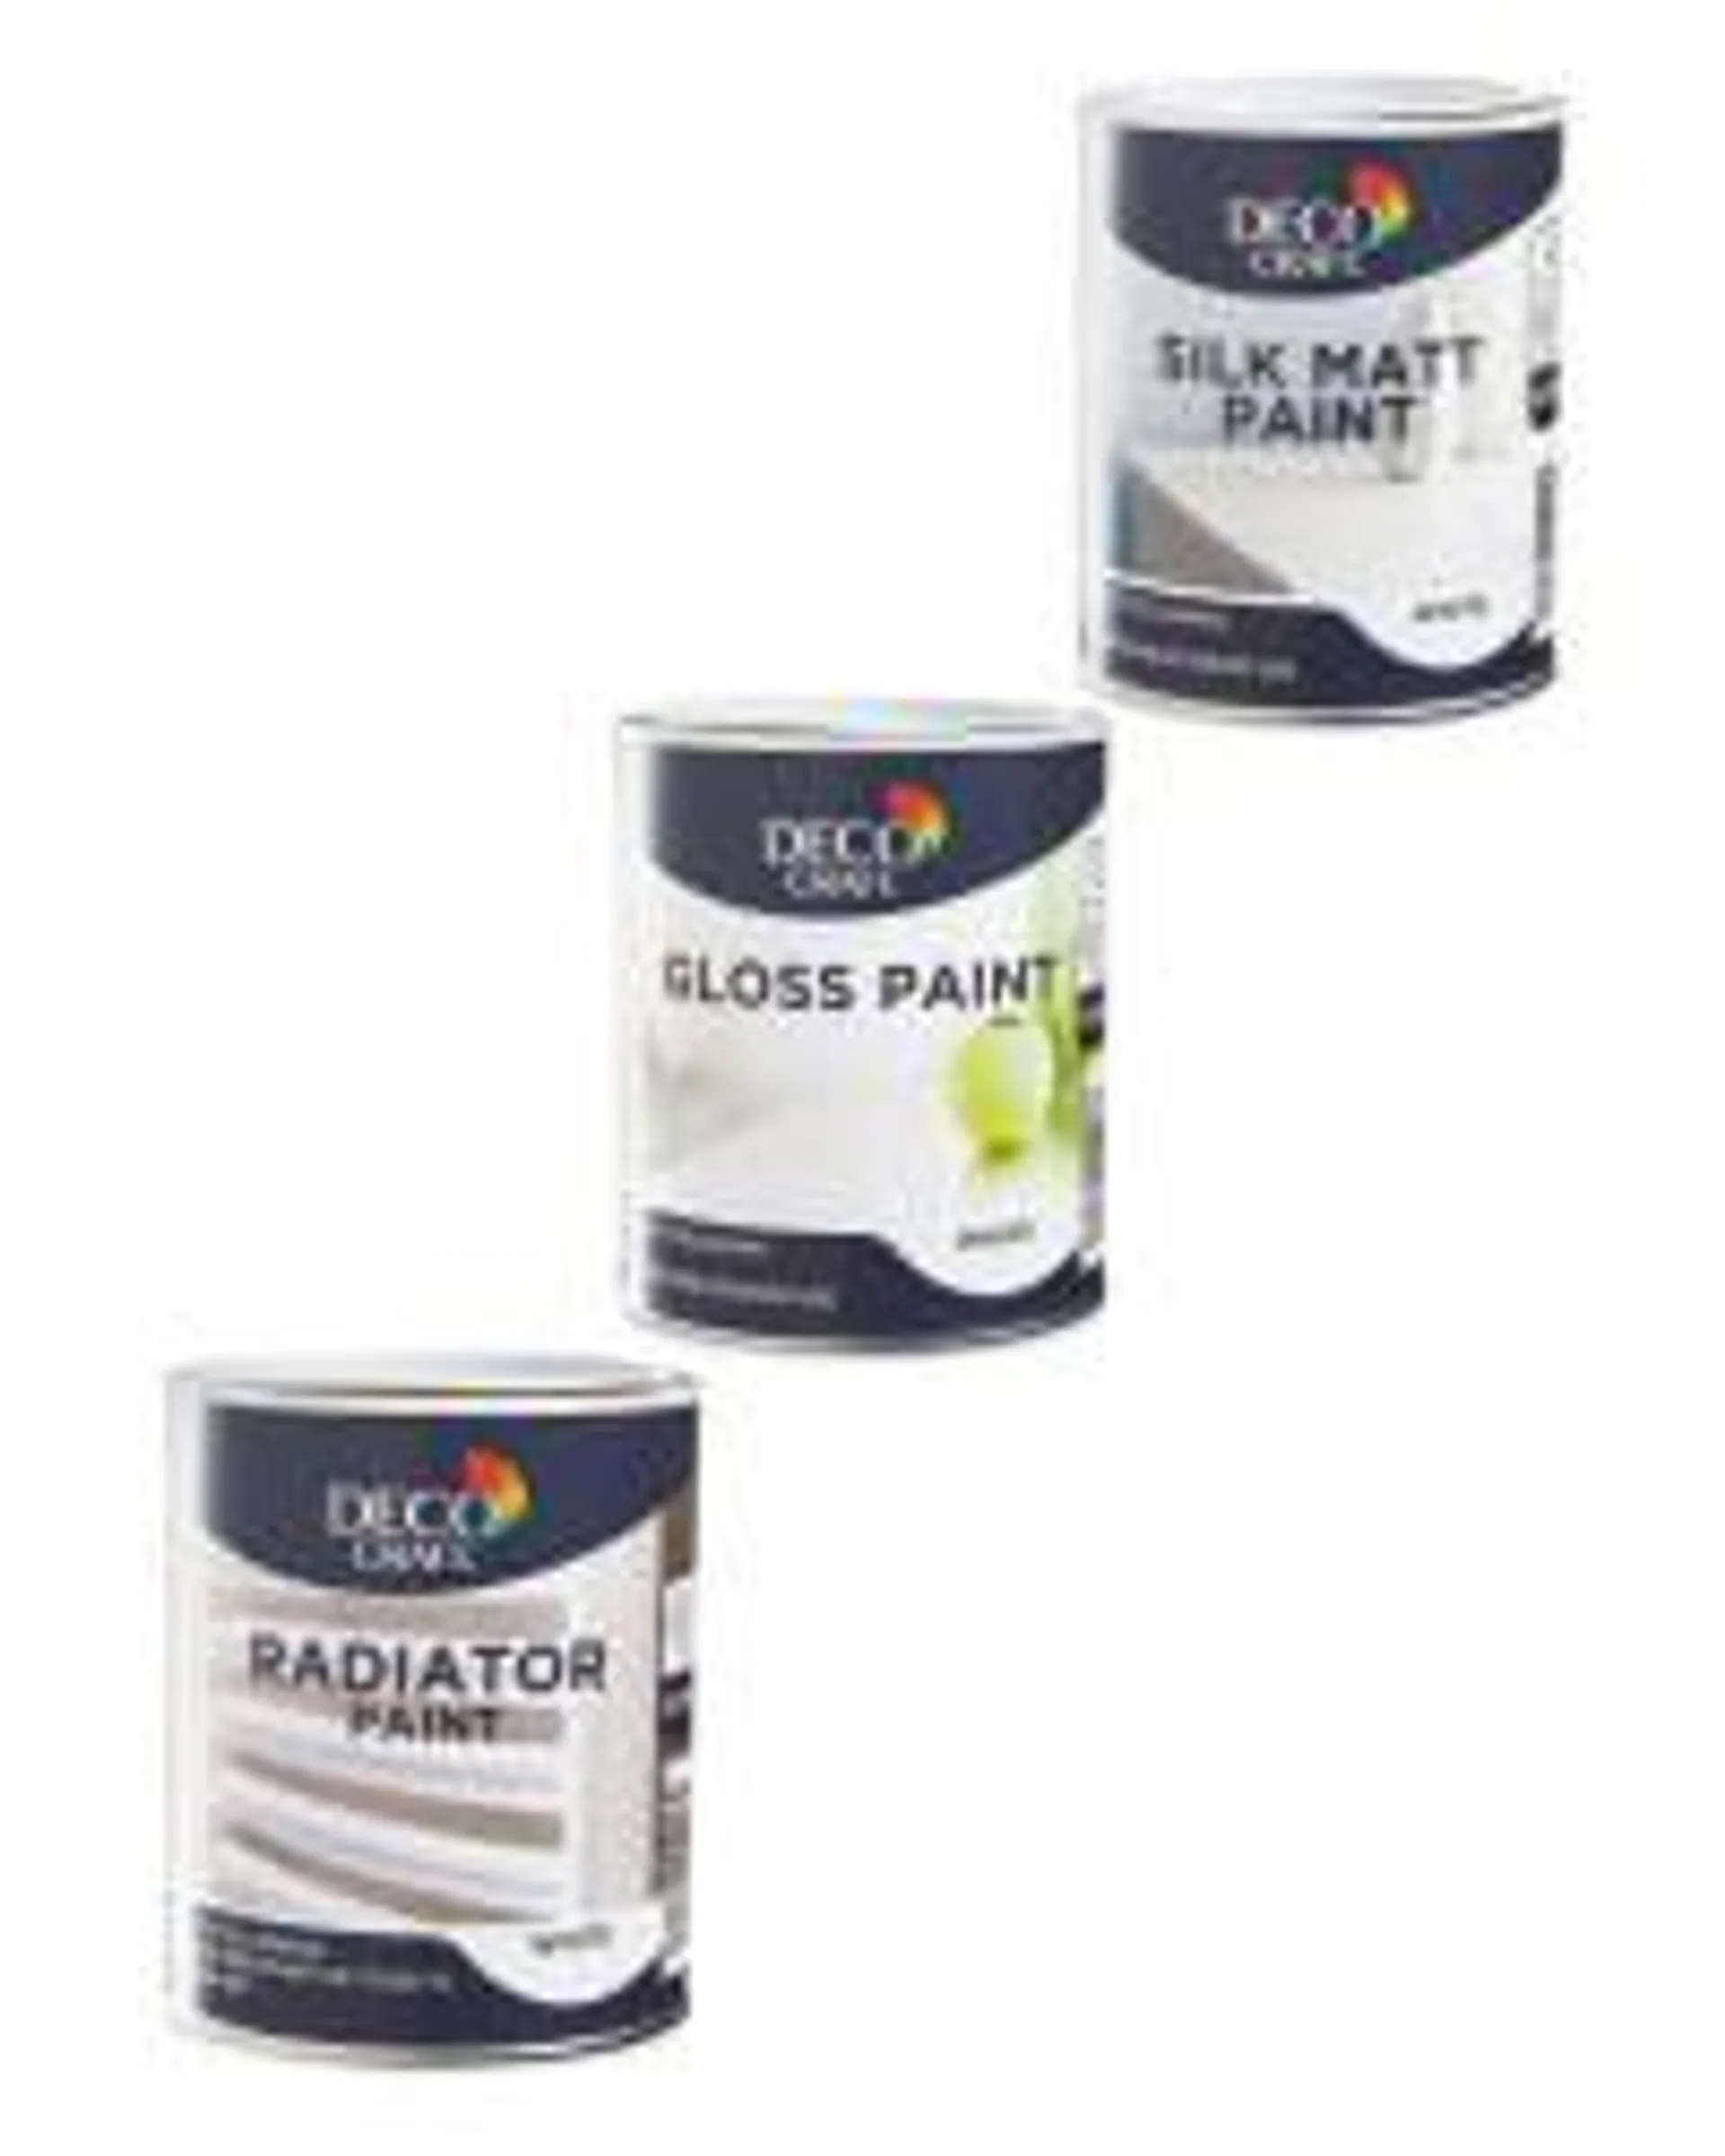 Silk Matt/Gloss/Radiator Paint